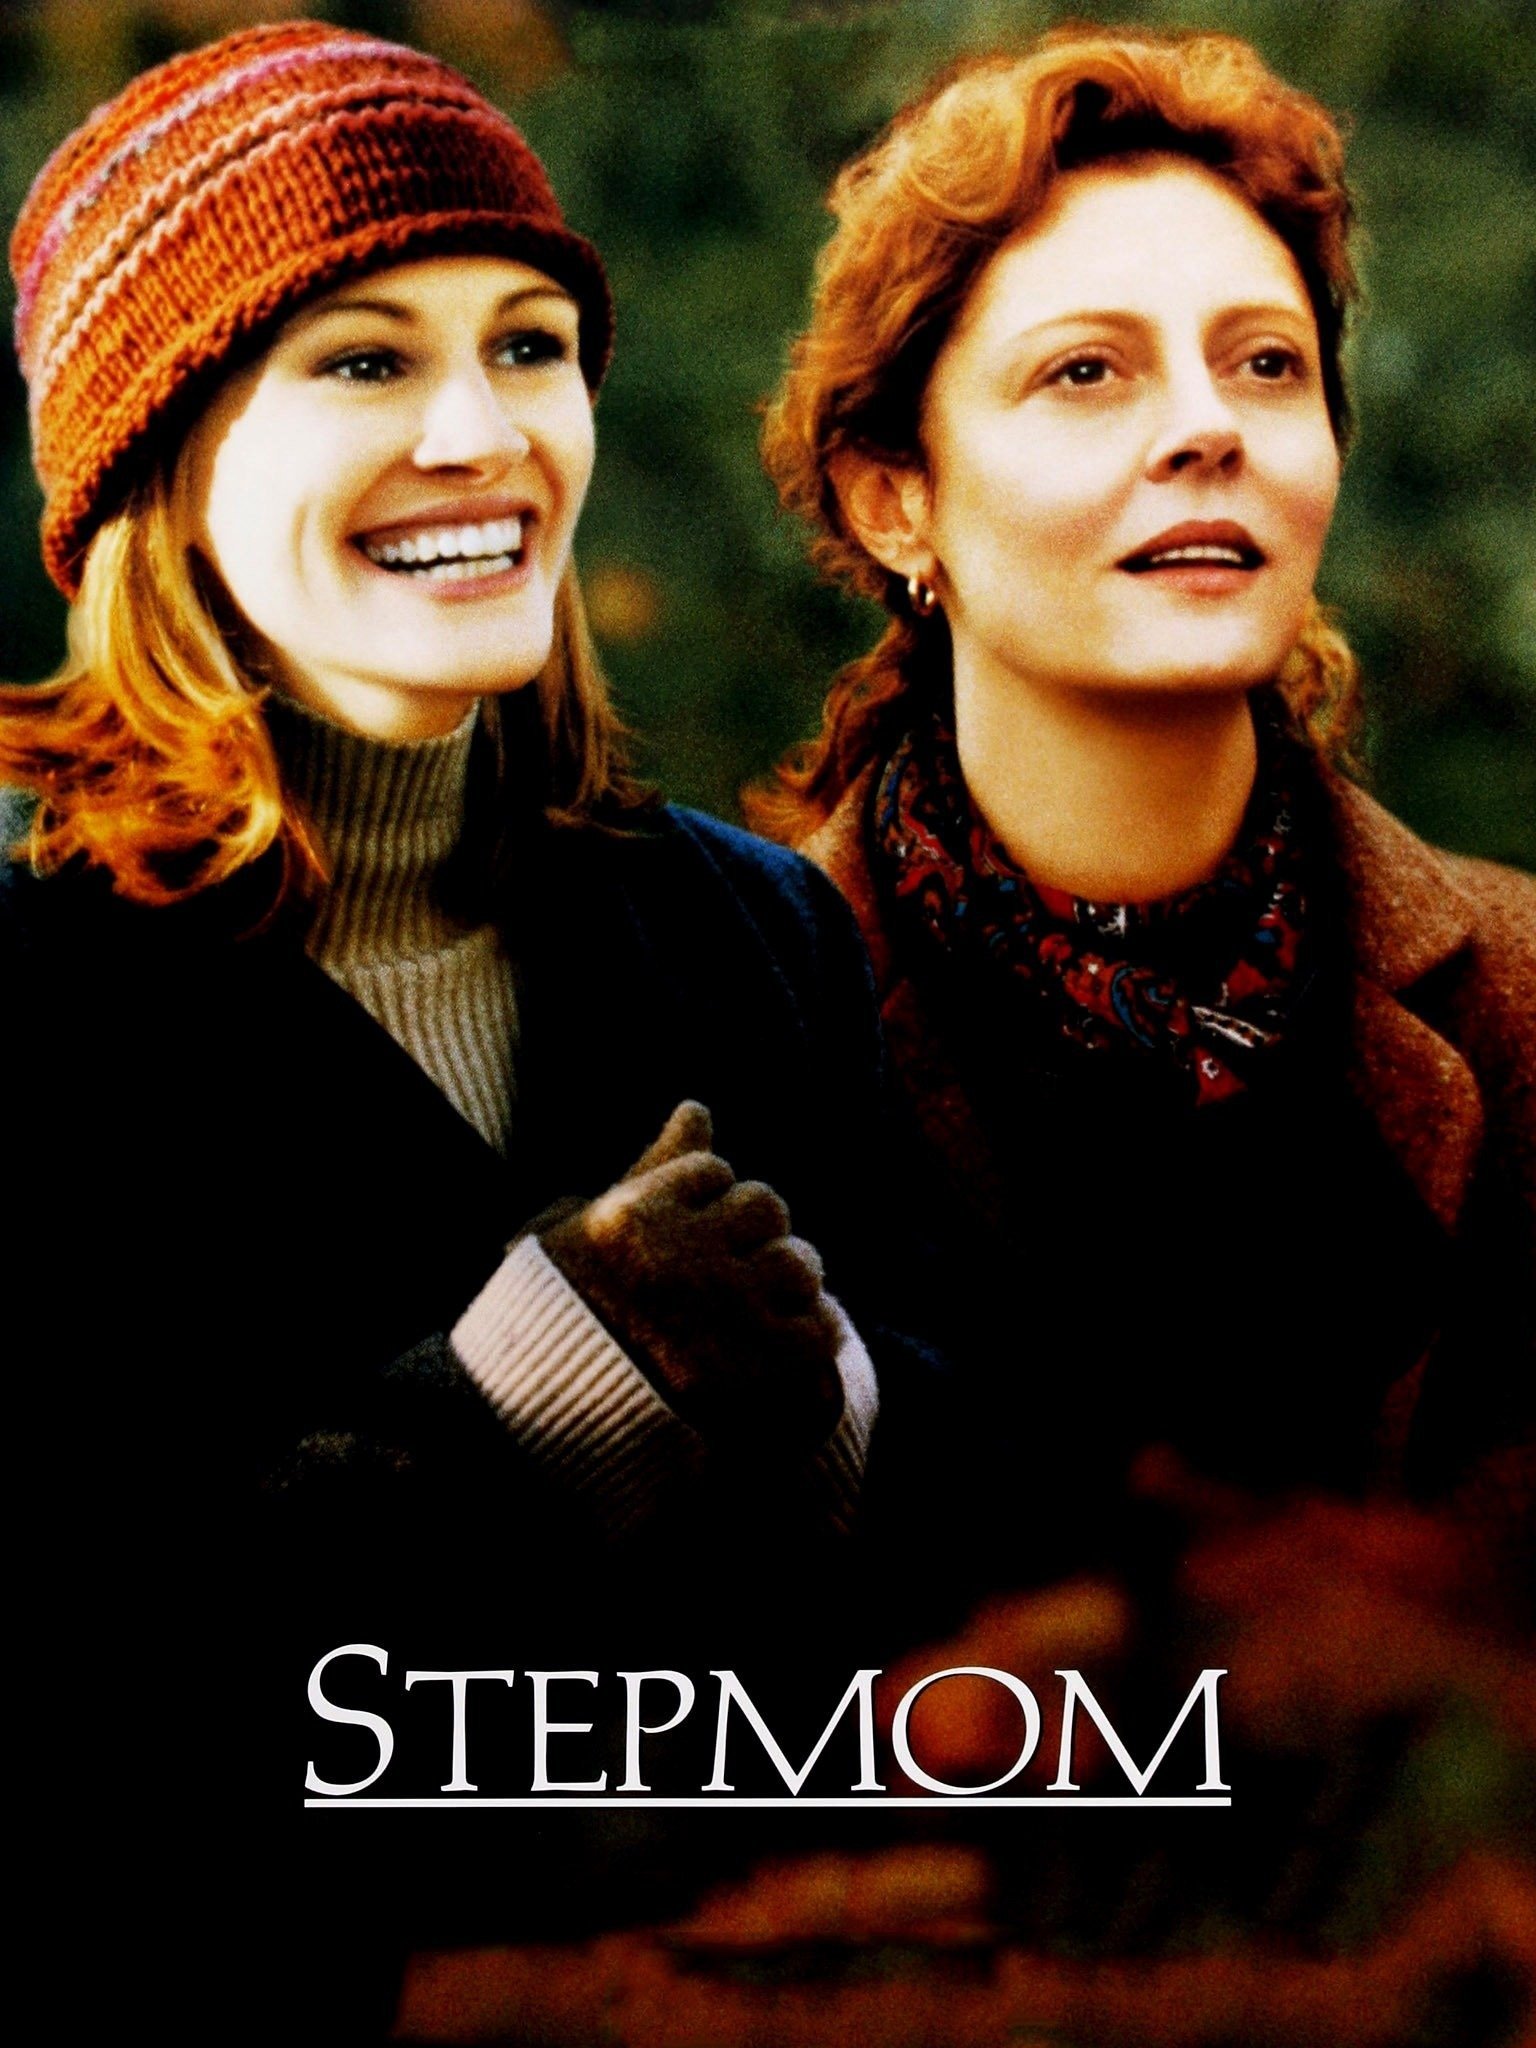 Stepmom - Rotten Tomatoes